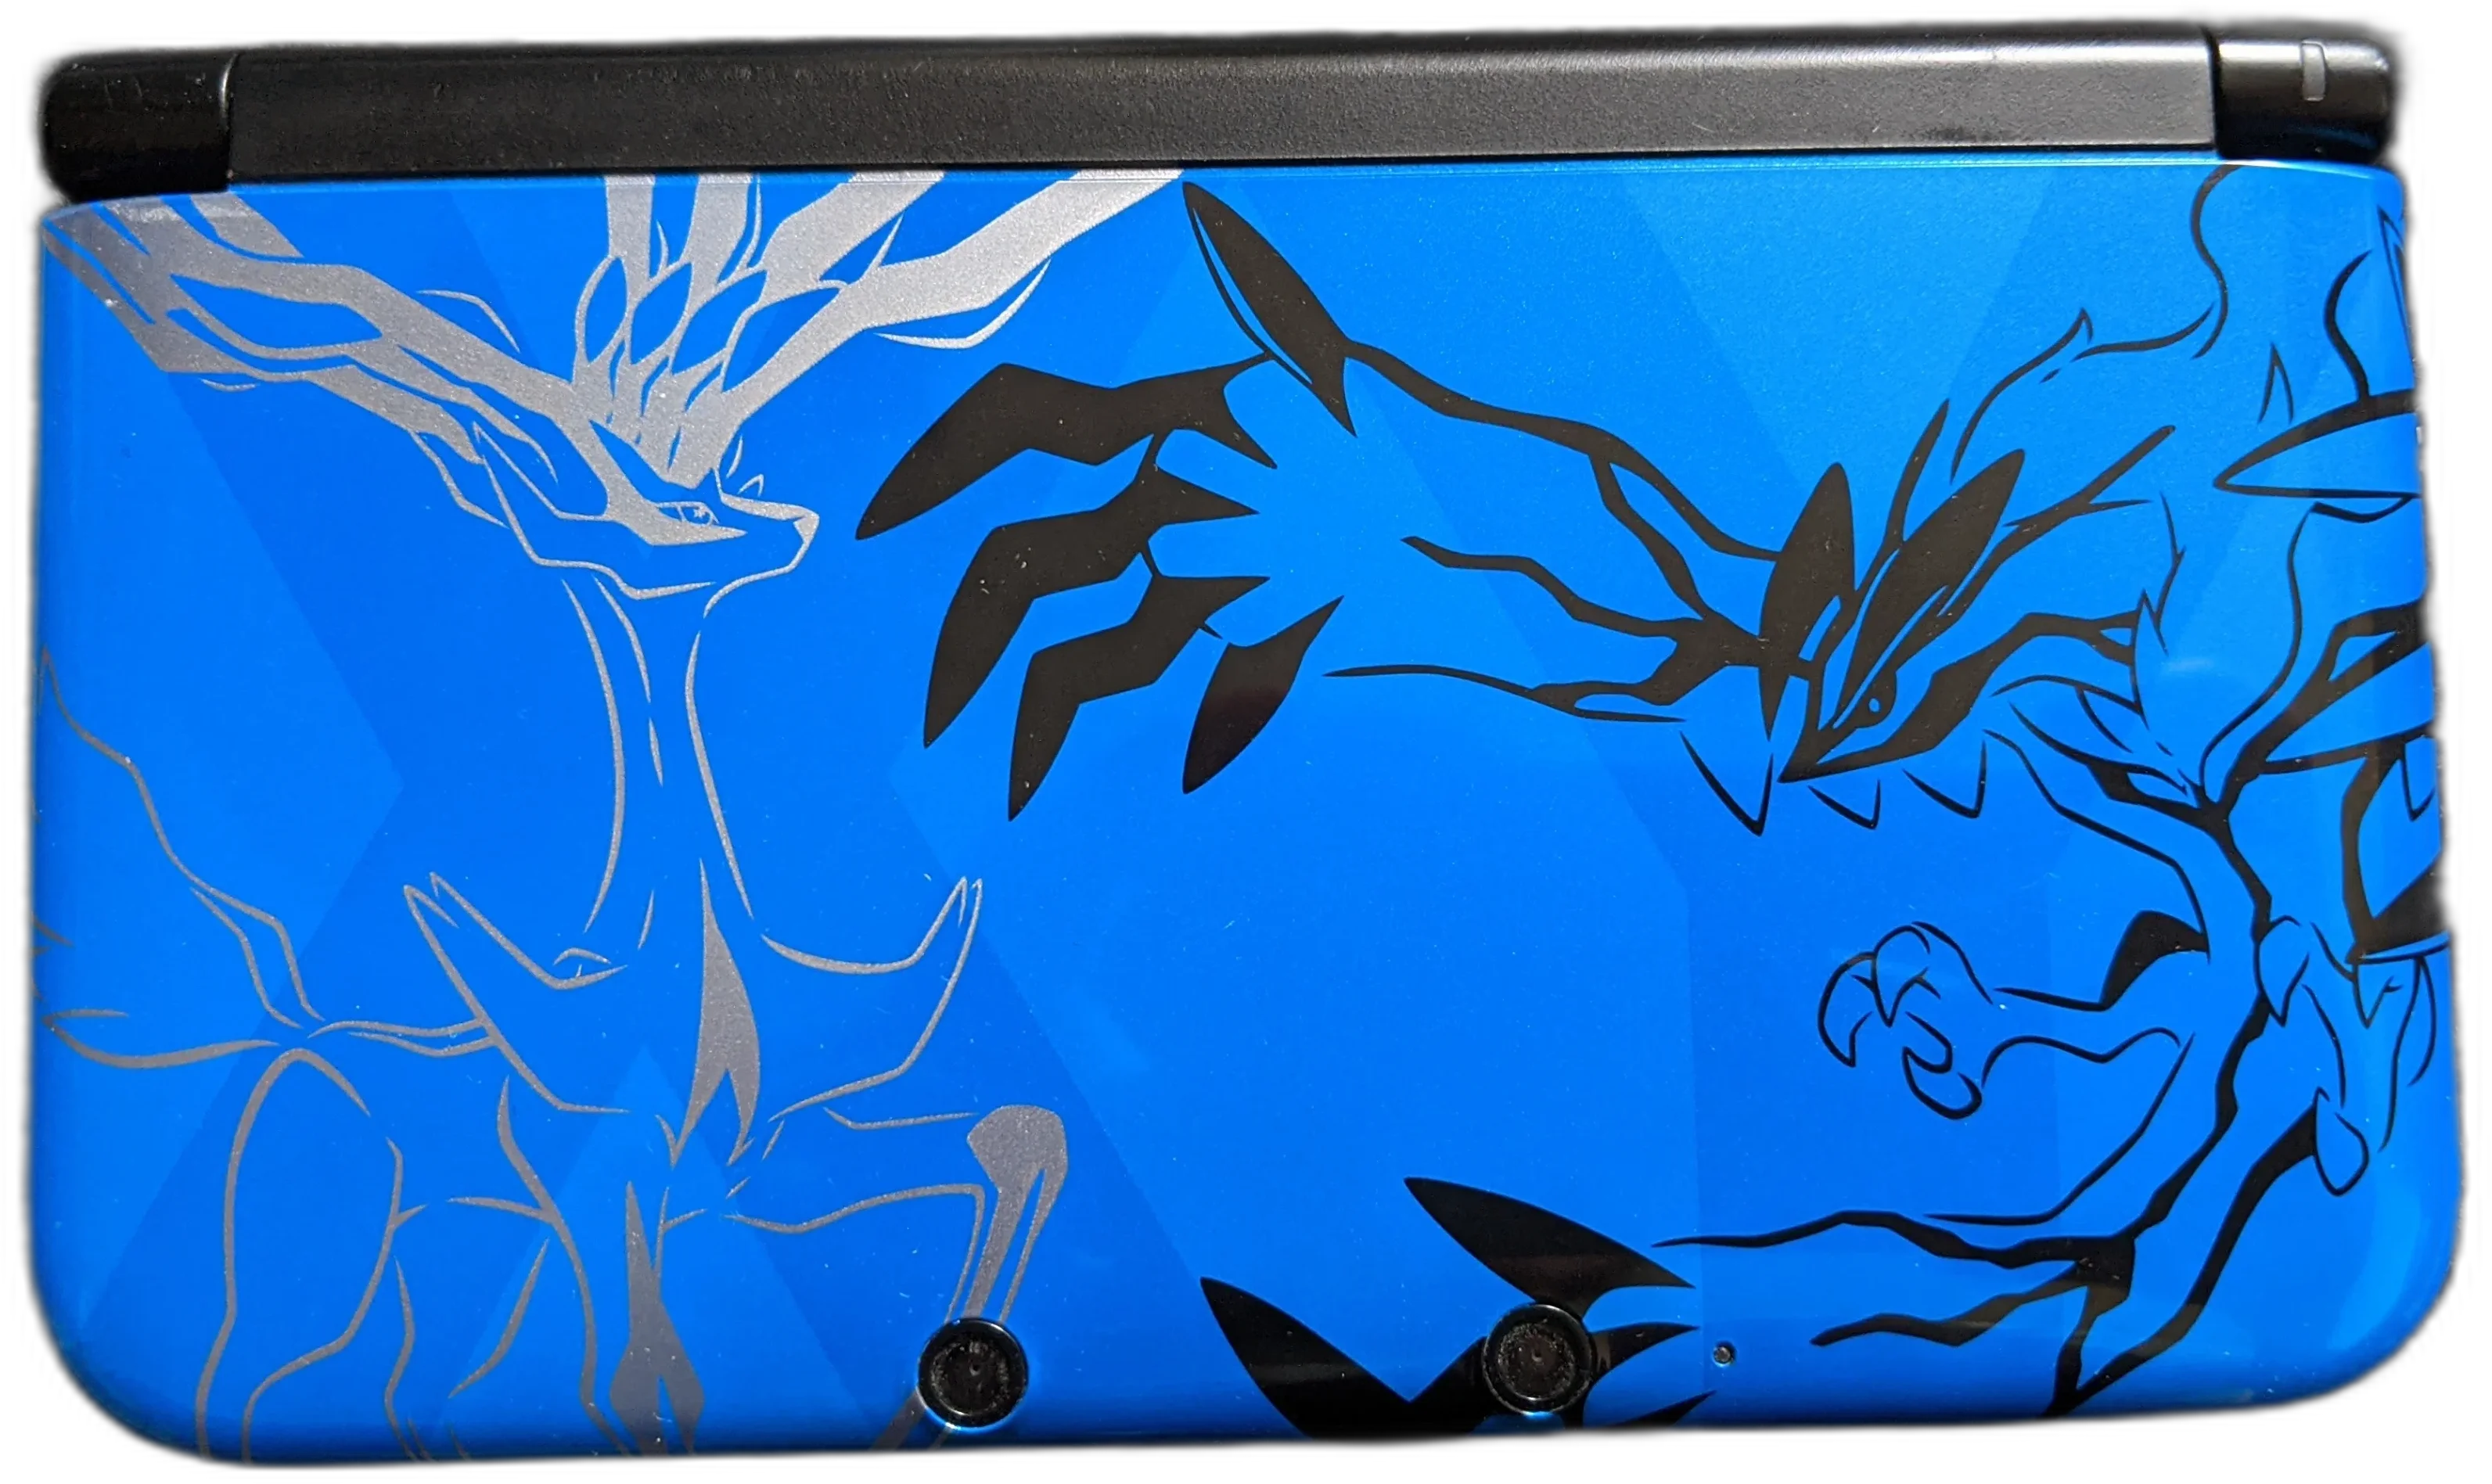  Nintendo 3DS LL Pokemon X/Y Blue Console [JP]